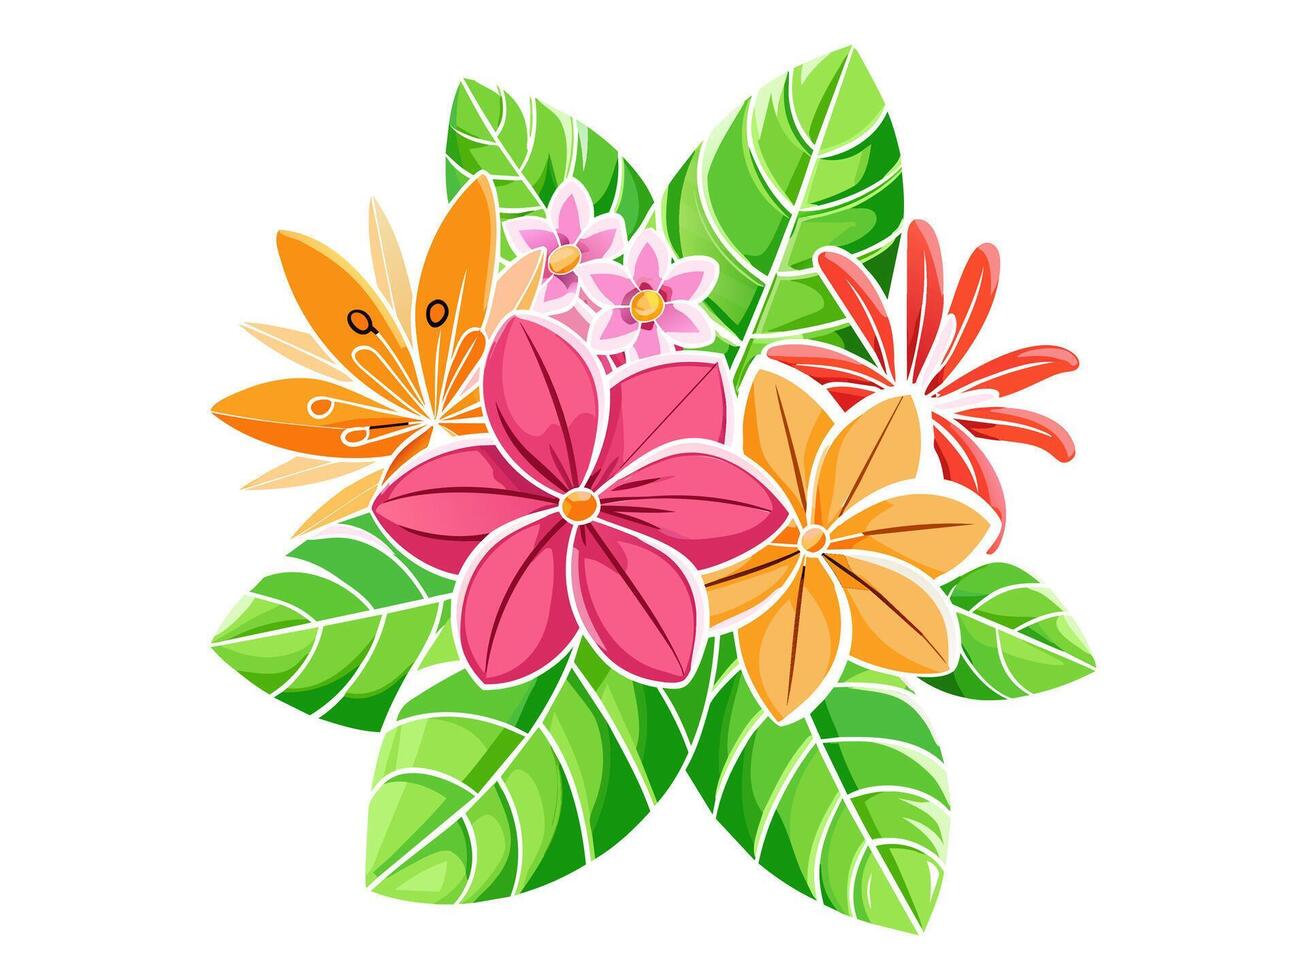 tropical flores y hojas ilustración. exótico flora Arte con vibrante colores. concepto de tropical naturaleza, botánica, exótico plantas, y verano vibras. aislado en blanco fondo vector